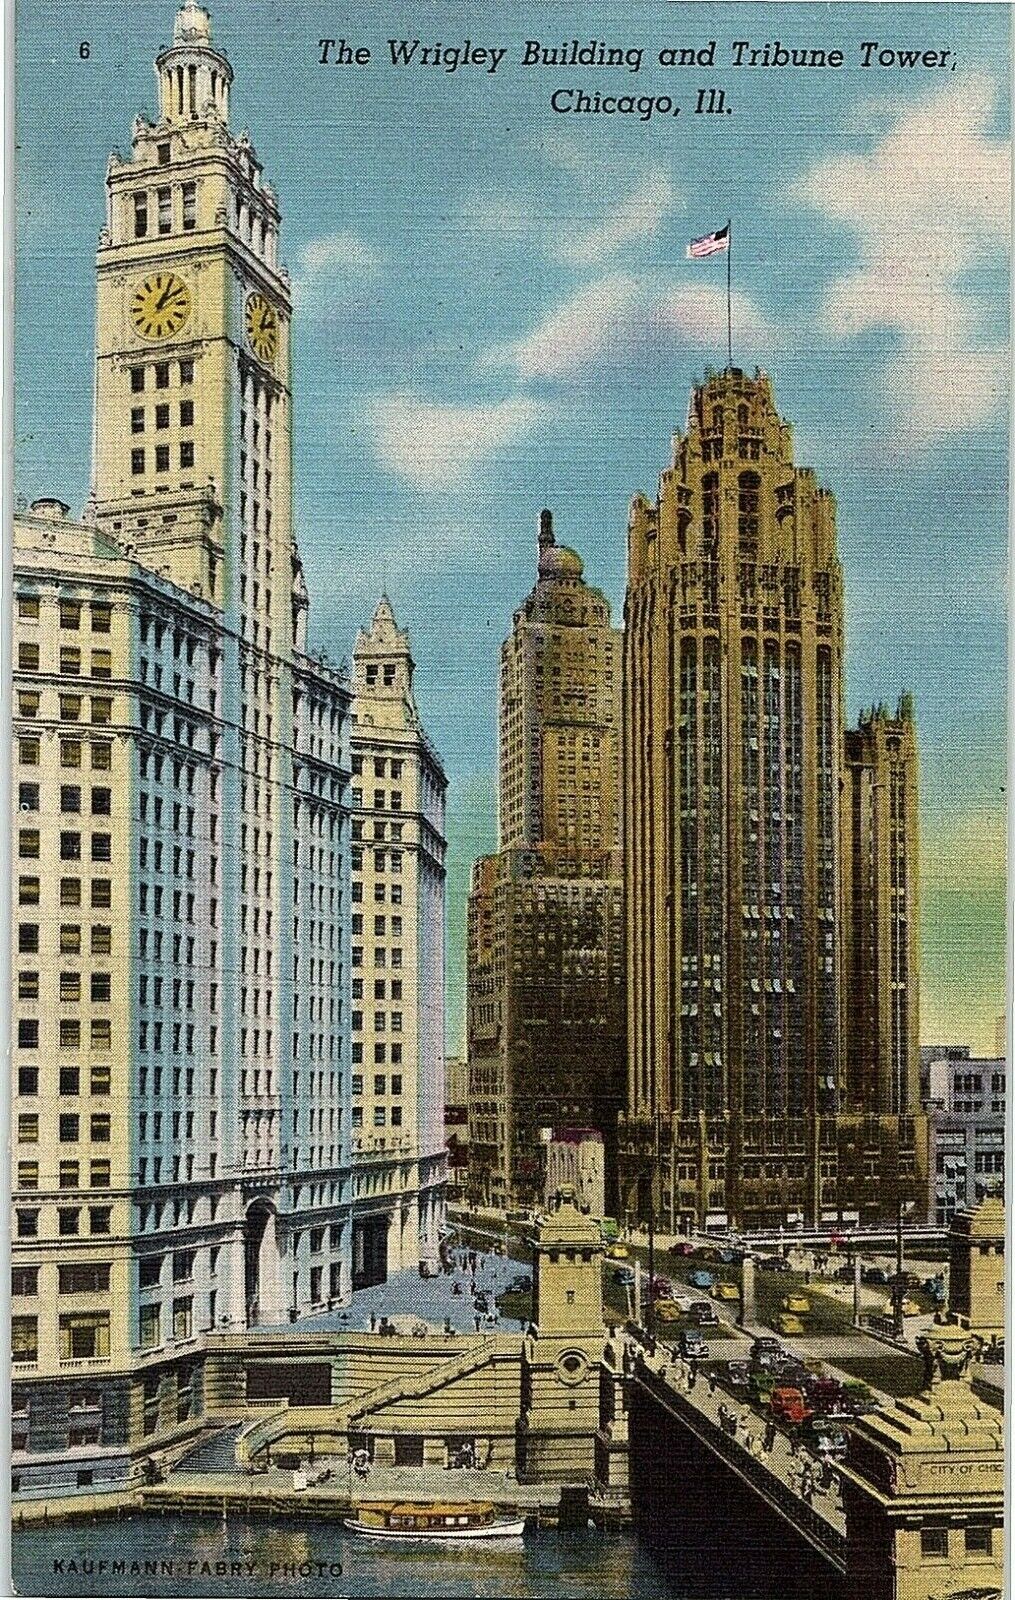 1940s Chicago Wrigley Building Tribune Tower Cityscape Linen Postcard 5-106